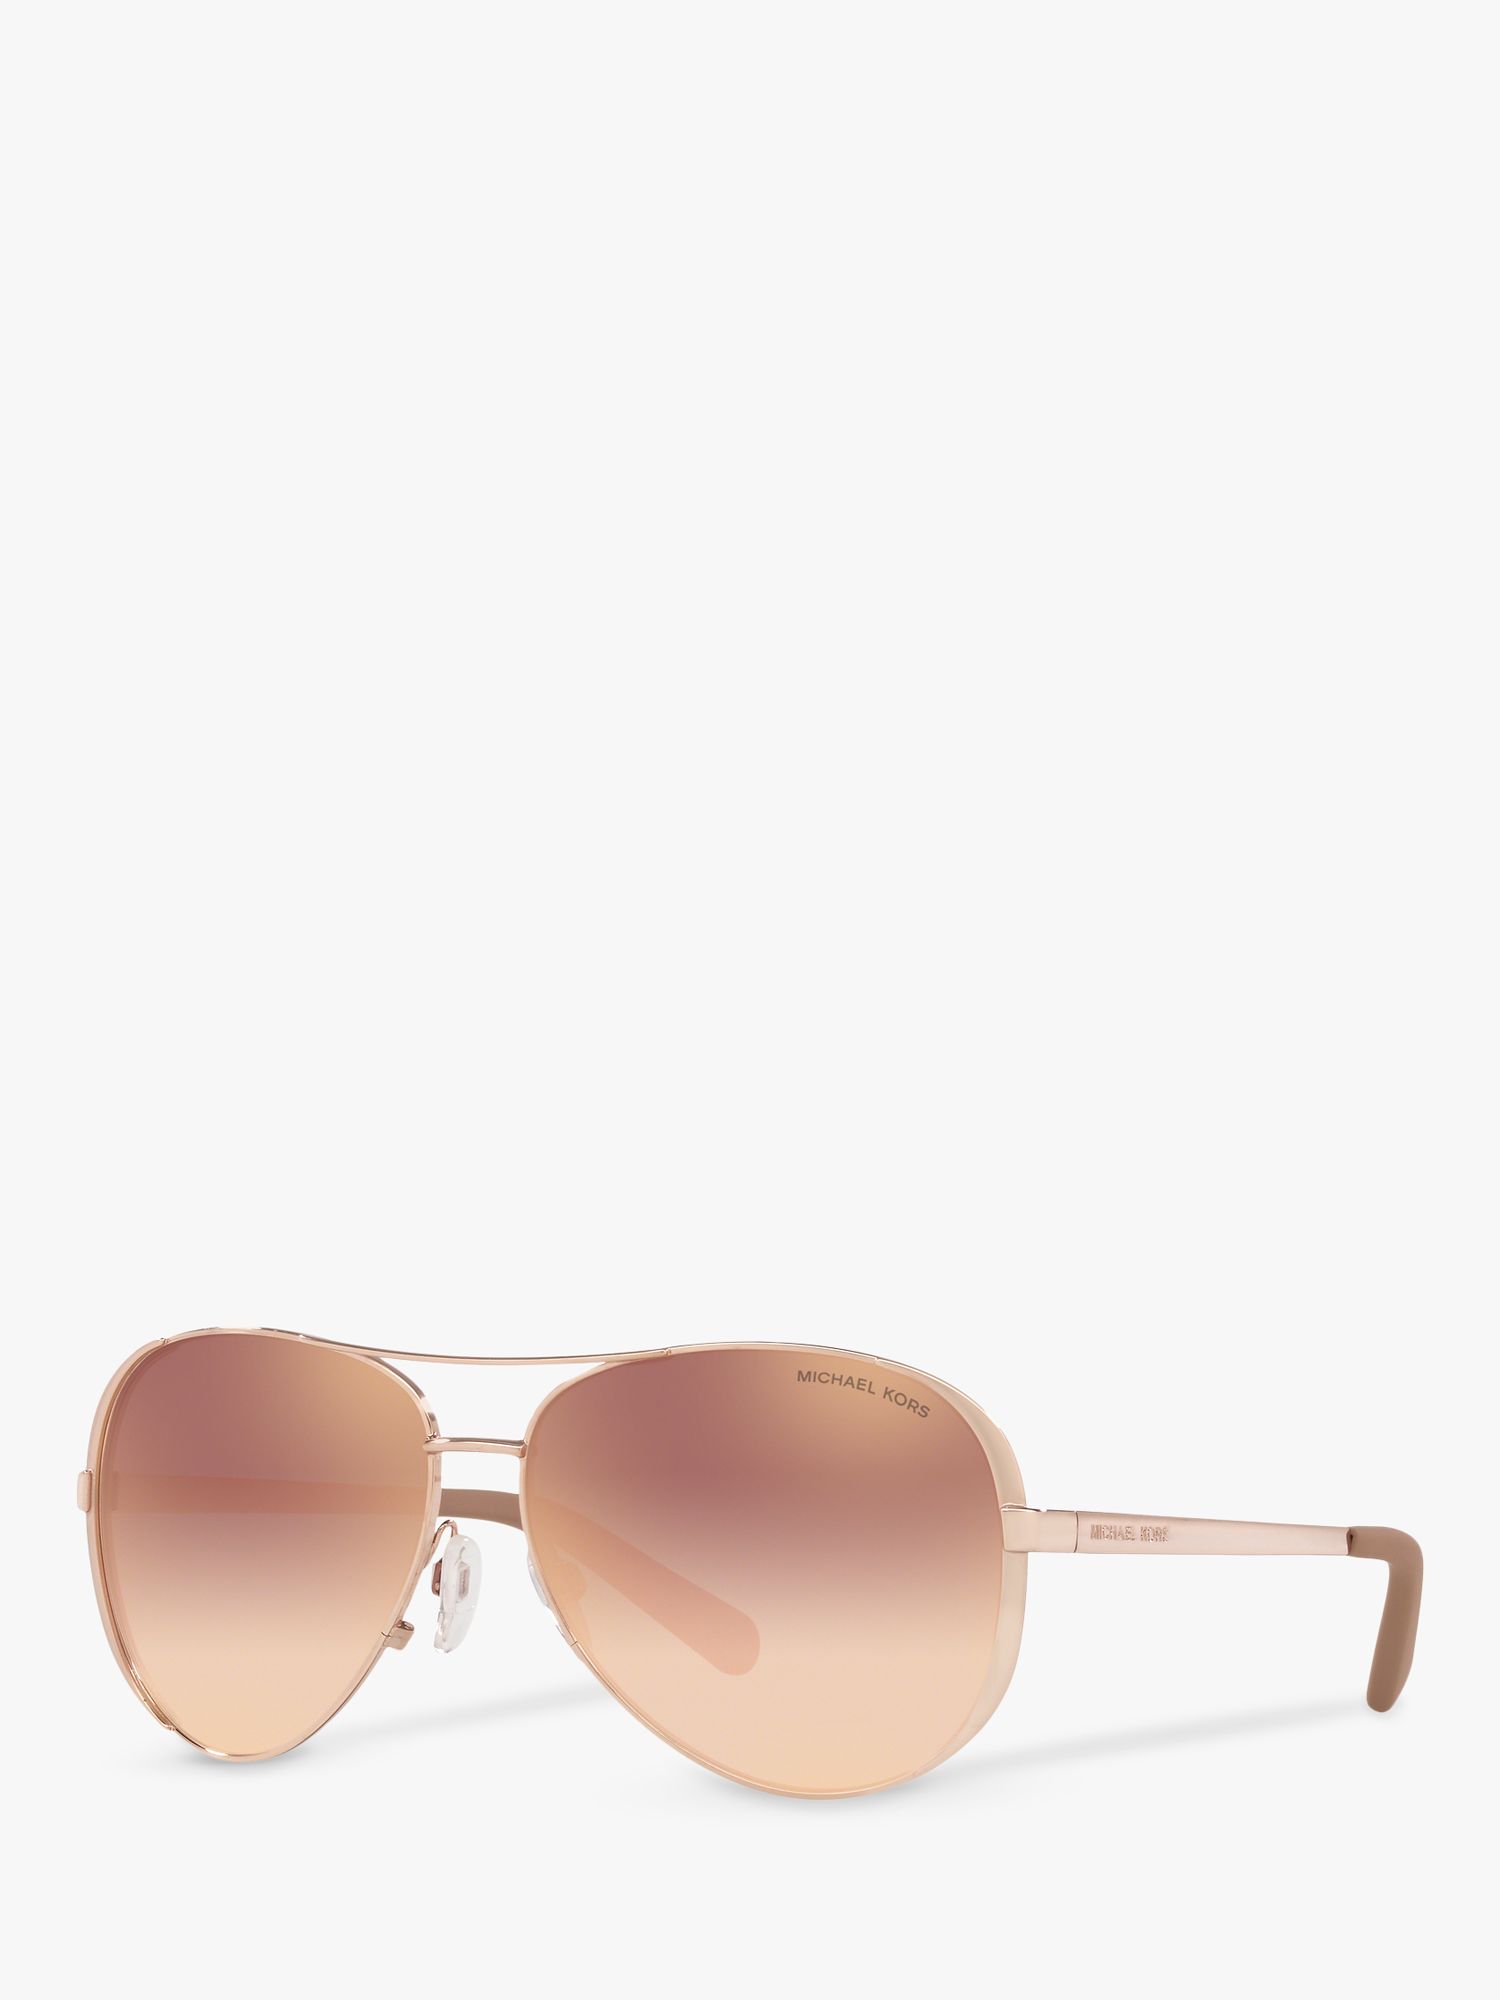 Michael Kors MK5004 Women's Chelsea Aviator Sunglasses, Rose Gold/Mirror  Pink at John Lewis & Partners